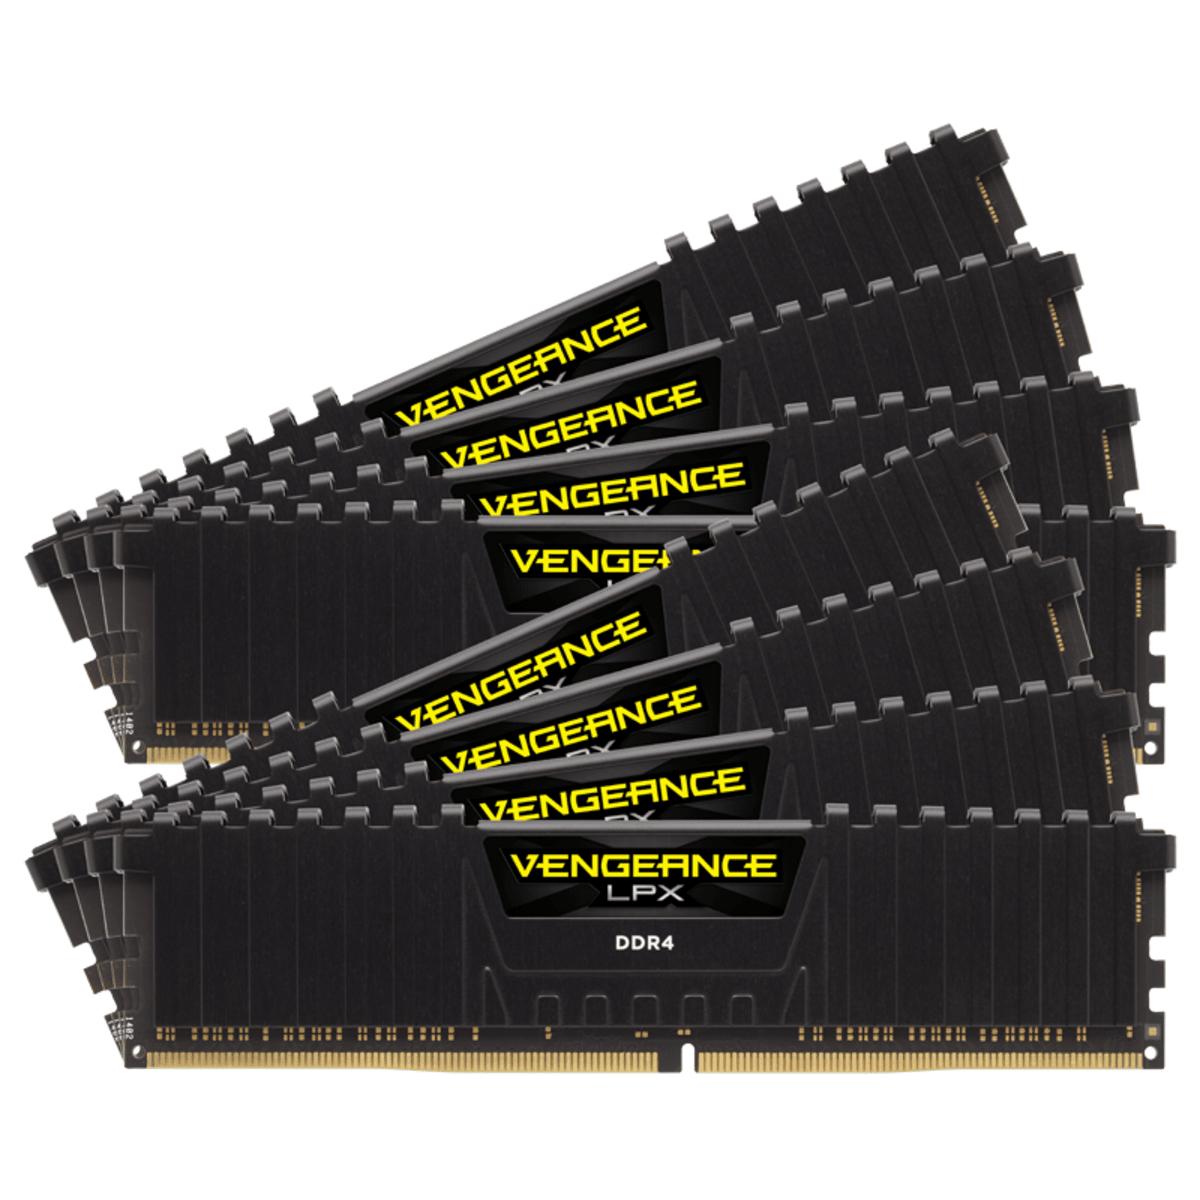 GB Speicher-Kit 8x32GB,1,35V,VengLPX DDR4 bk 256 CORSAIR